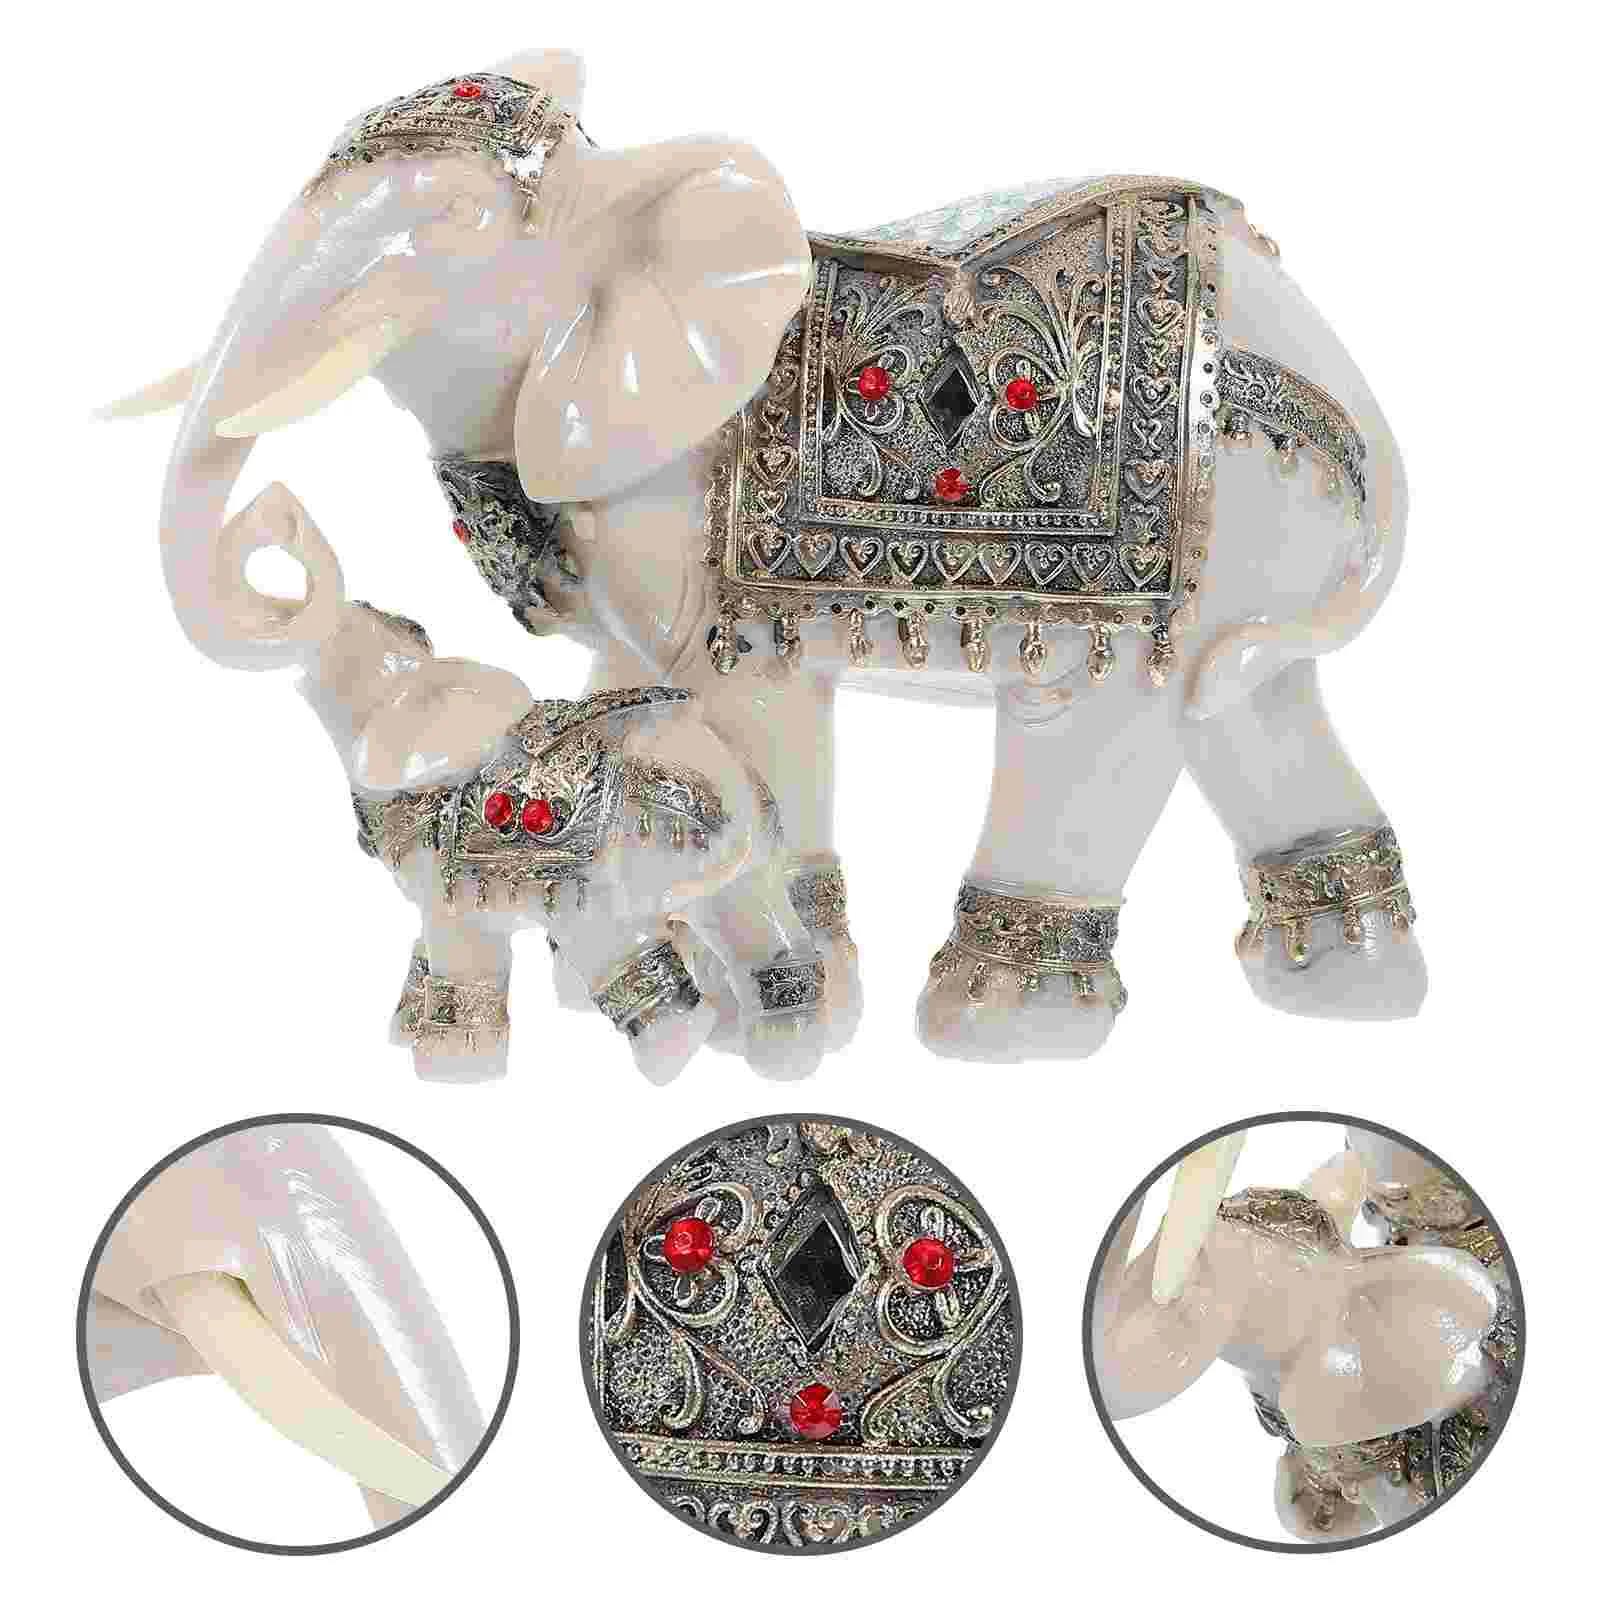 

Elephant Ornaments Wealth Statue Room Decor Resin Crafts Figurine Desktop Adornment Animal European Style Vintage Luck